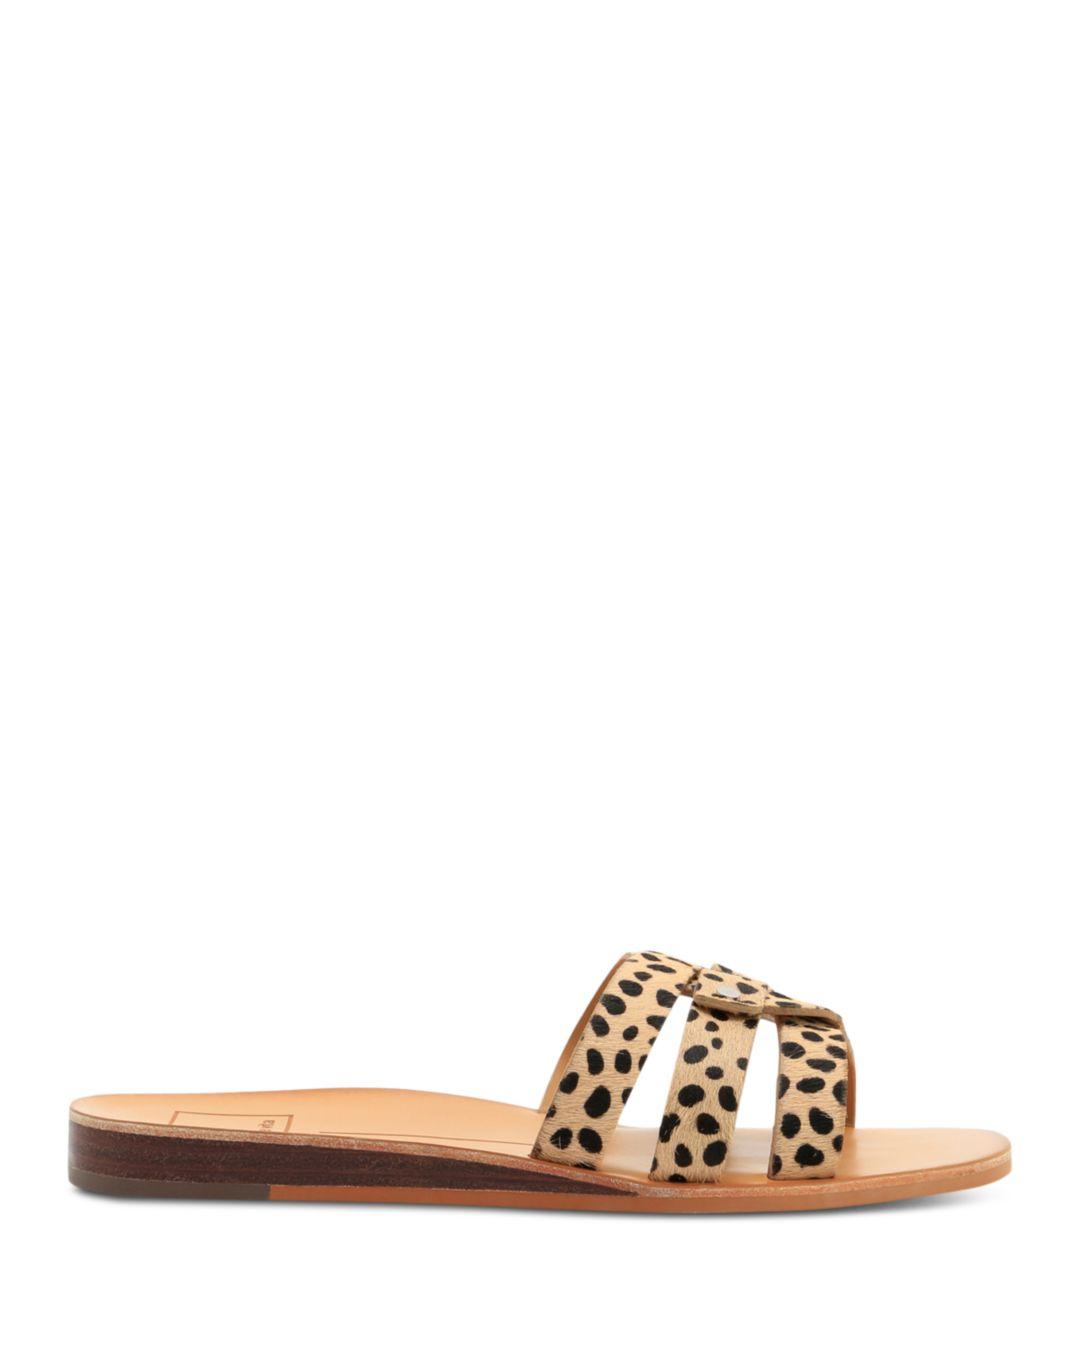 dolce vita sandals leopard